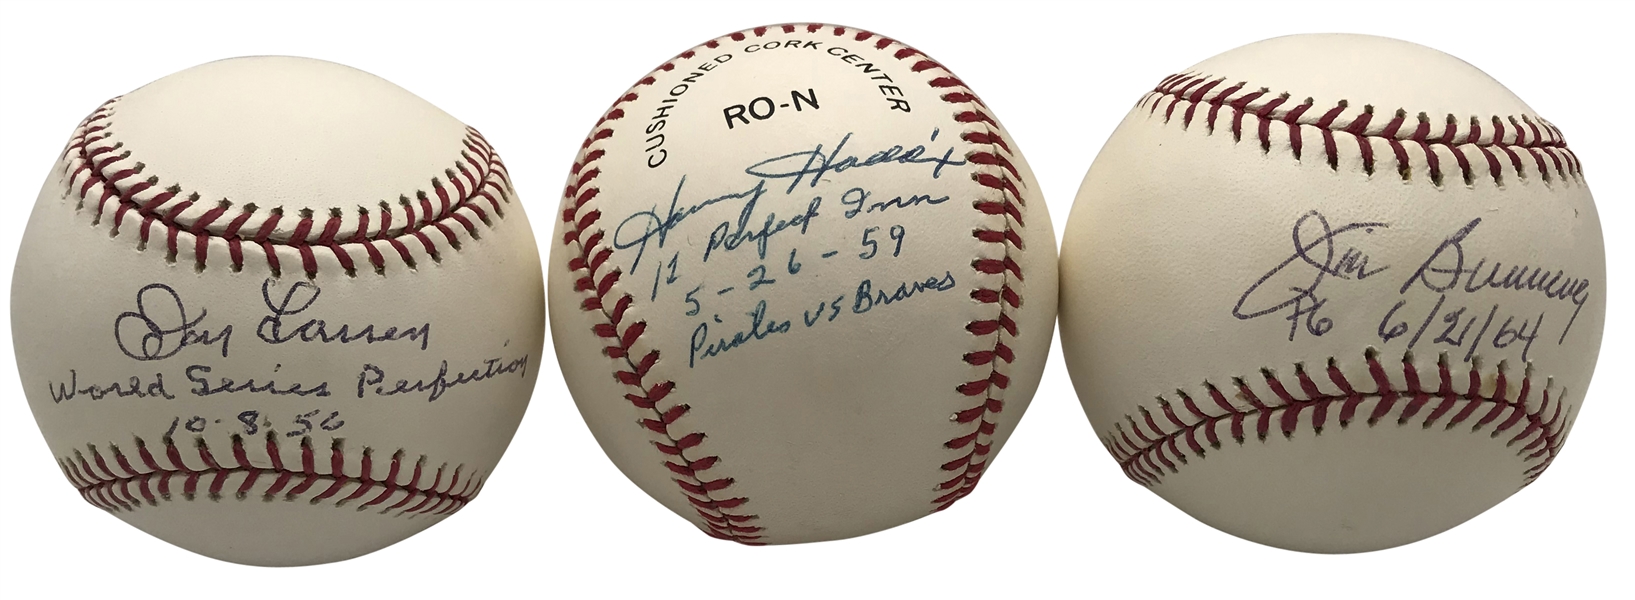 1950s/60s "Perfect" Game Pitchers Lot of Three (3) Signed & Inscribed Baseballs w/ Larsen, Haddix & Bunning (Beckett/BAS Guaranteed)